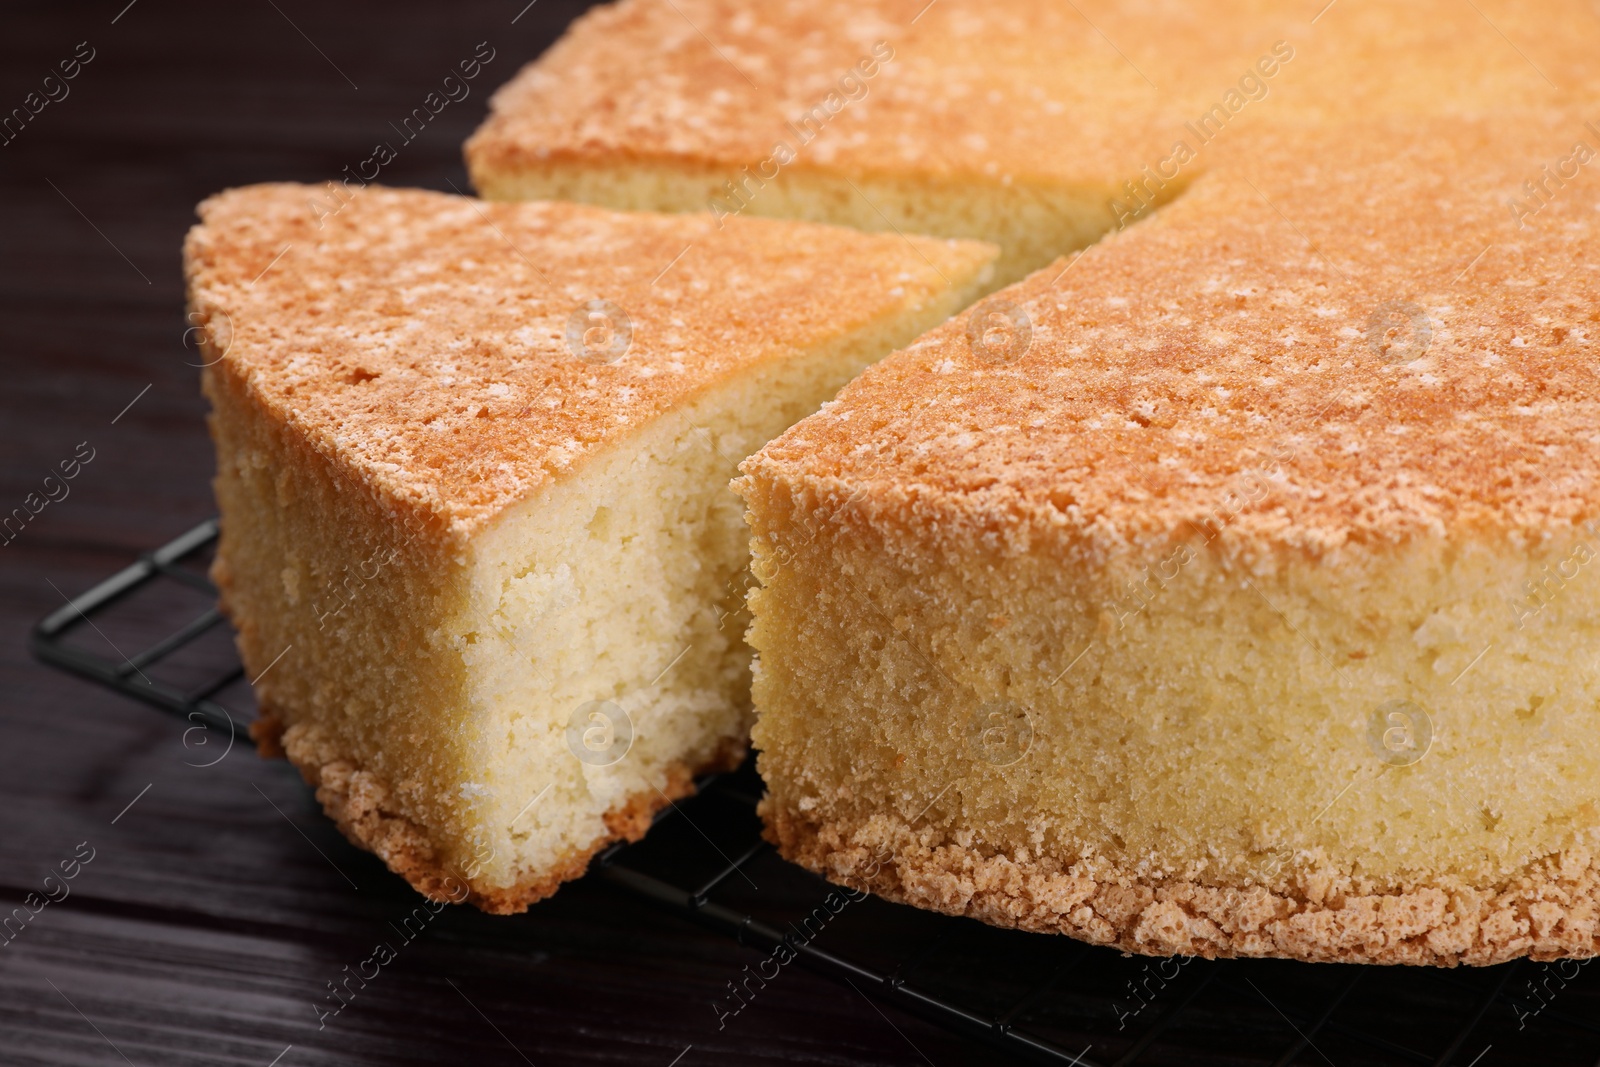 Photo of Tasty sponge cake on wooden table, closeup